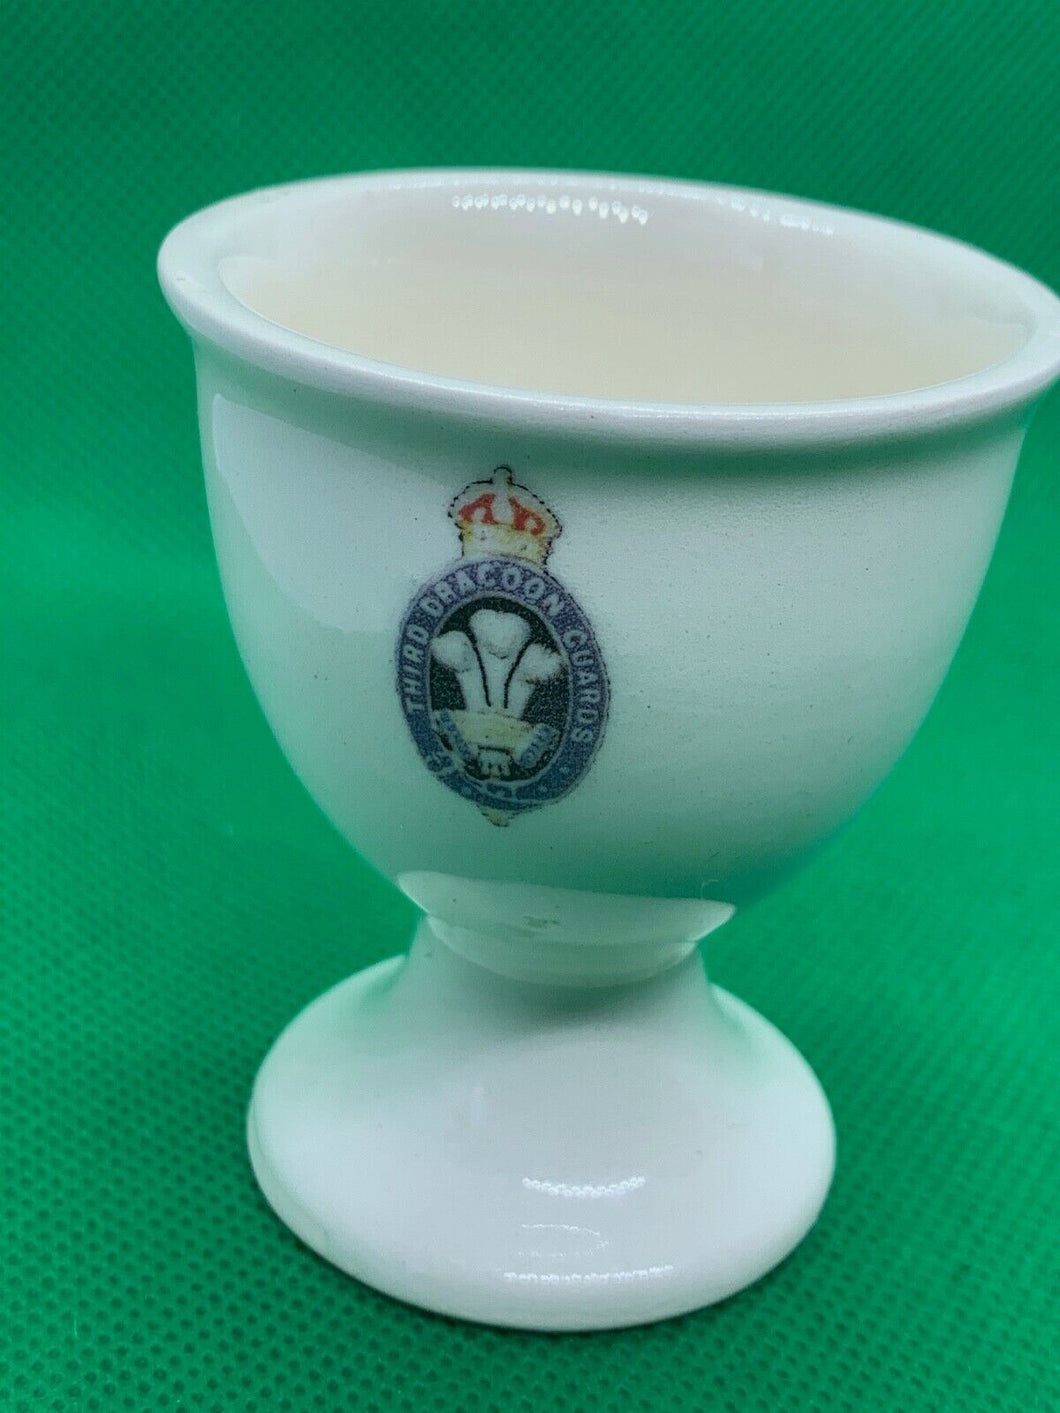 Badges of Empire Collectors Series Egg Cup - Third Dragoon Guards - No 106